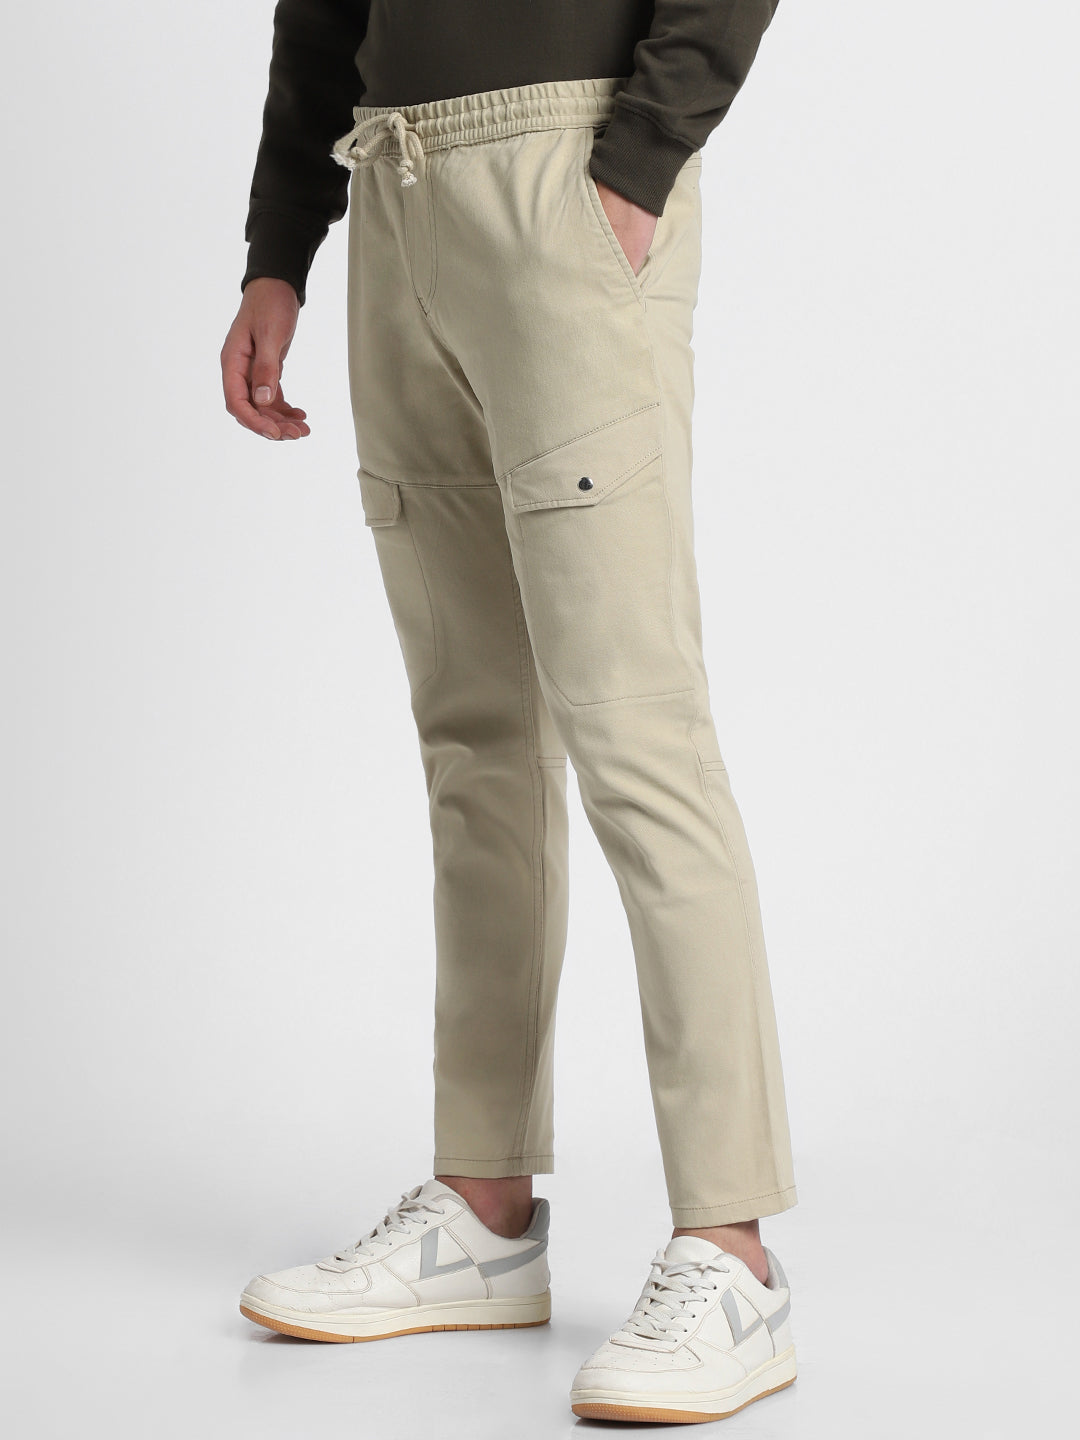 Dennis Lingo Mens's Light Khaki Solid Cargo Trousers